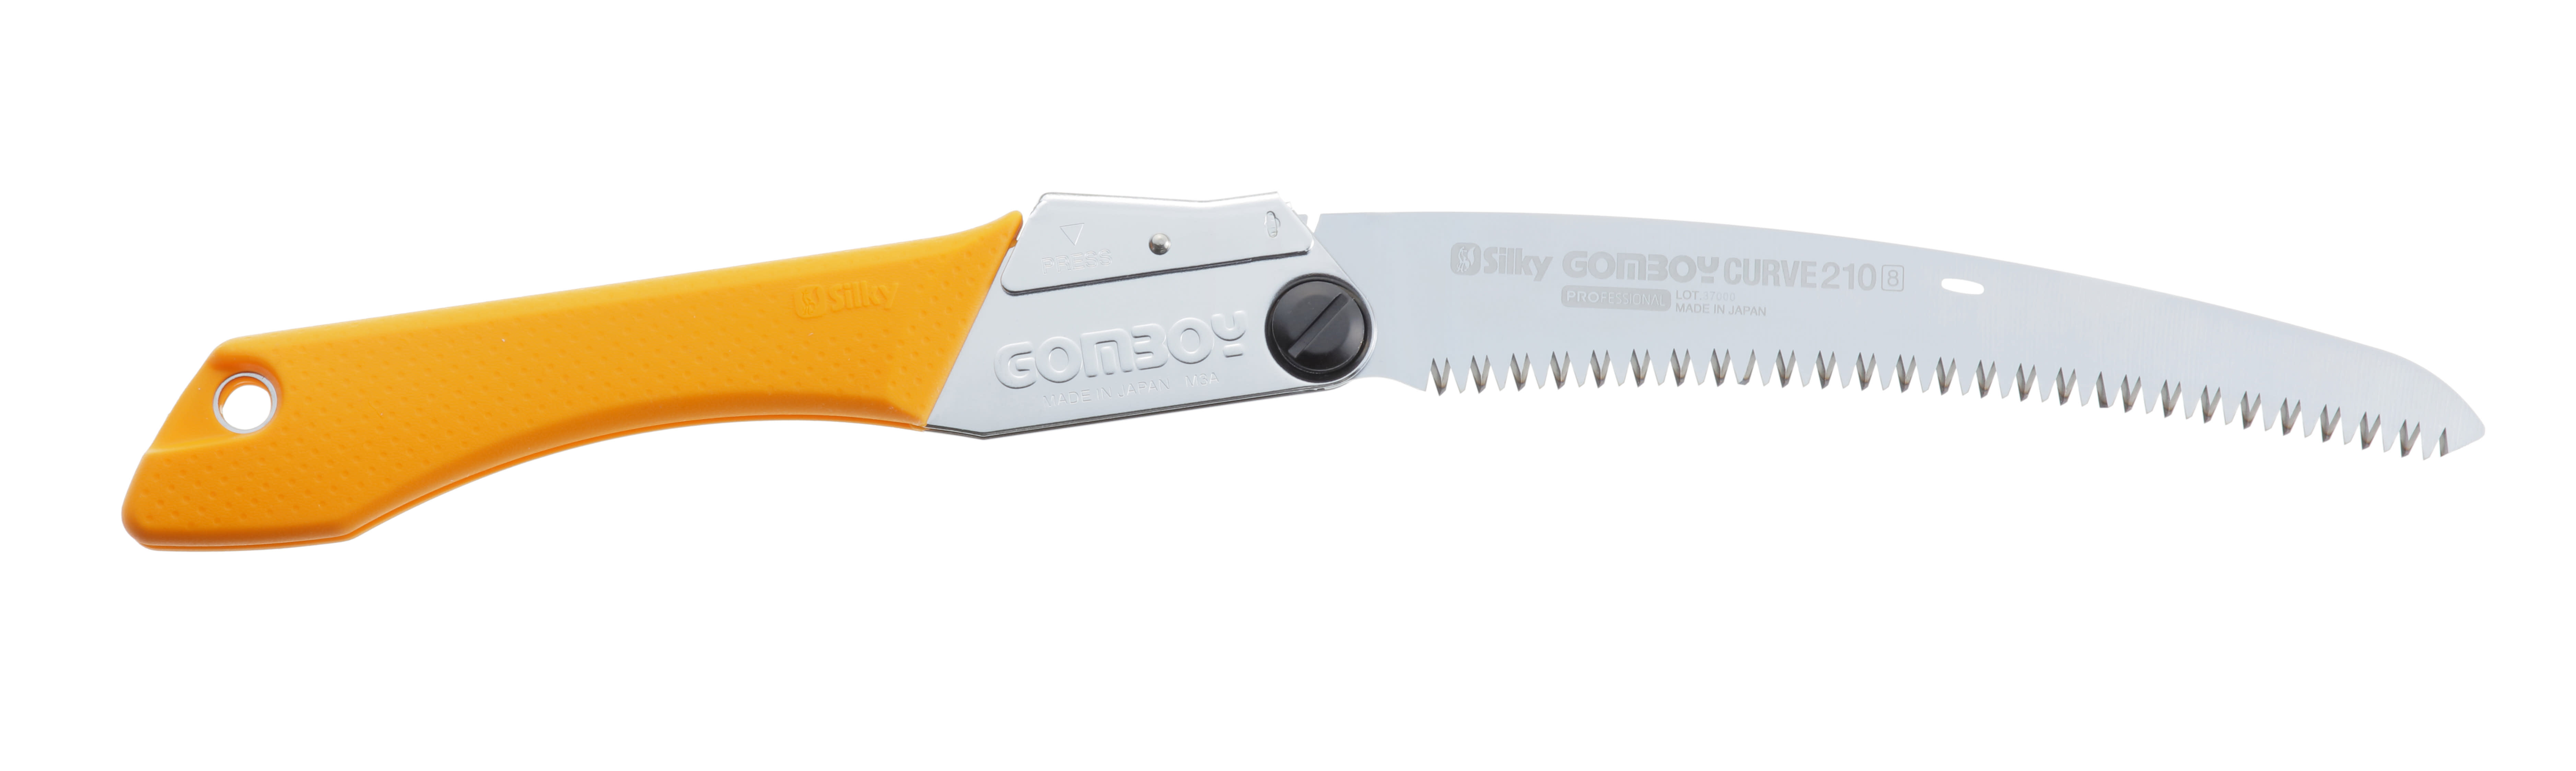 Silky® Gomboy Curve 210mm Saw - Large Teeth